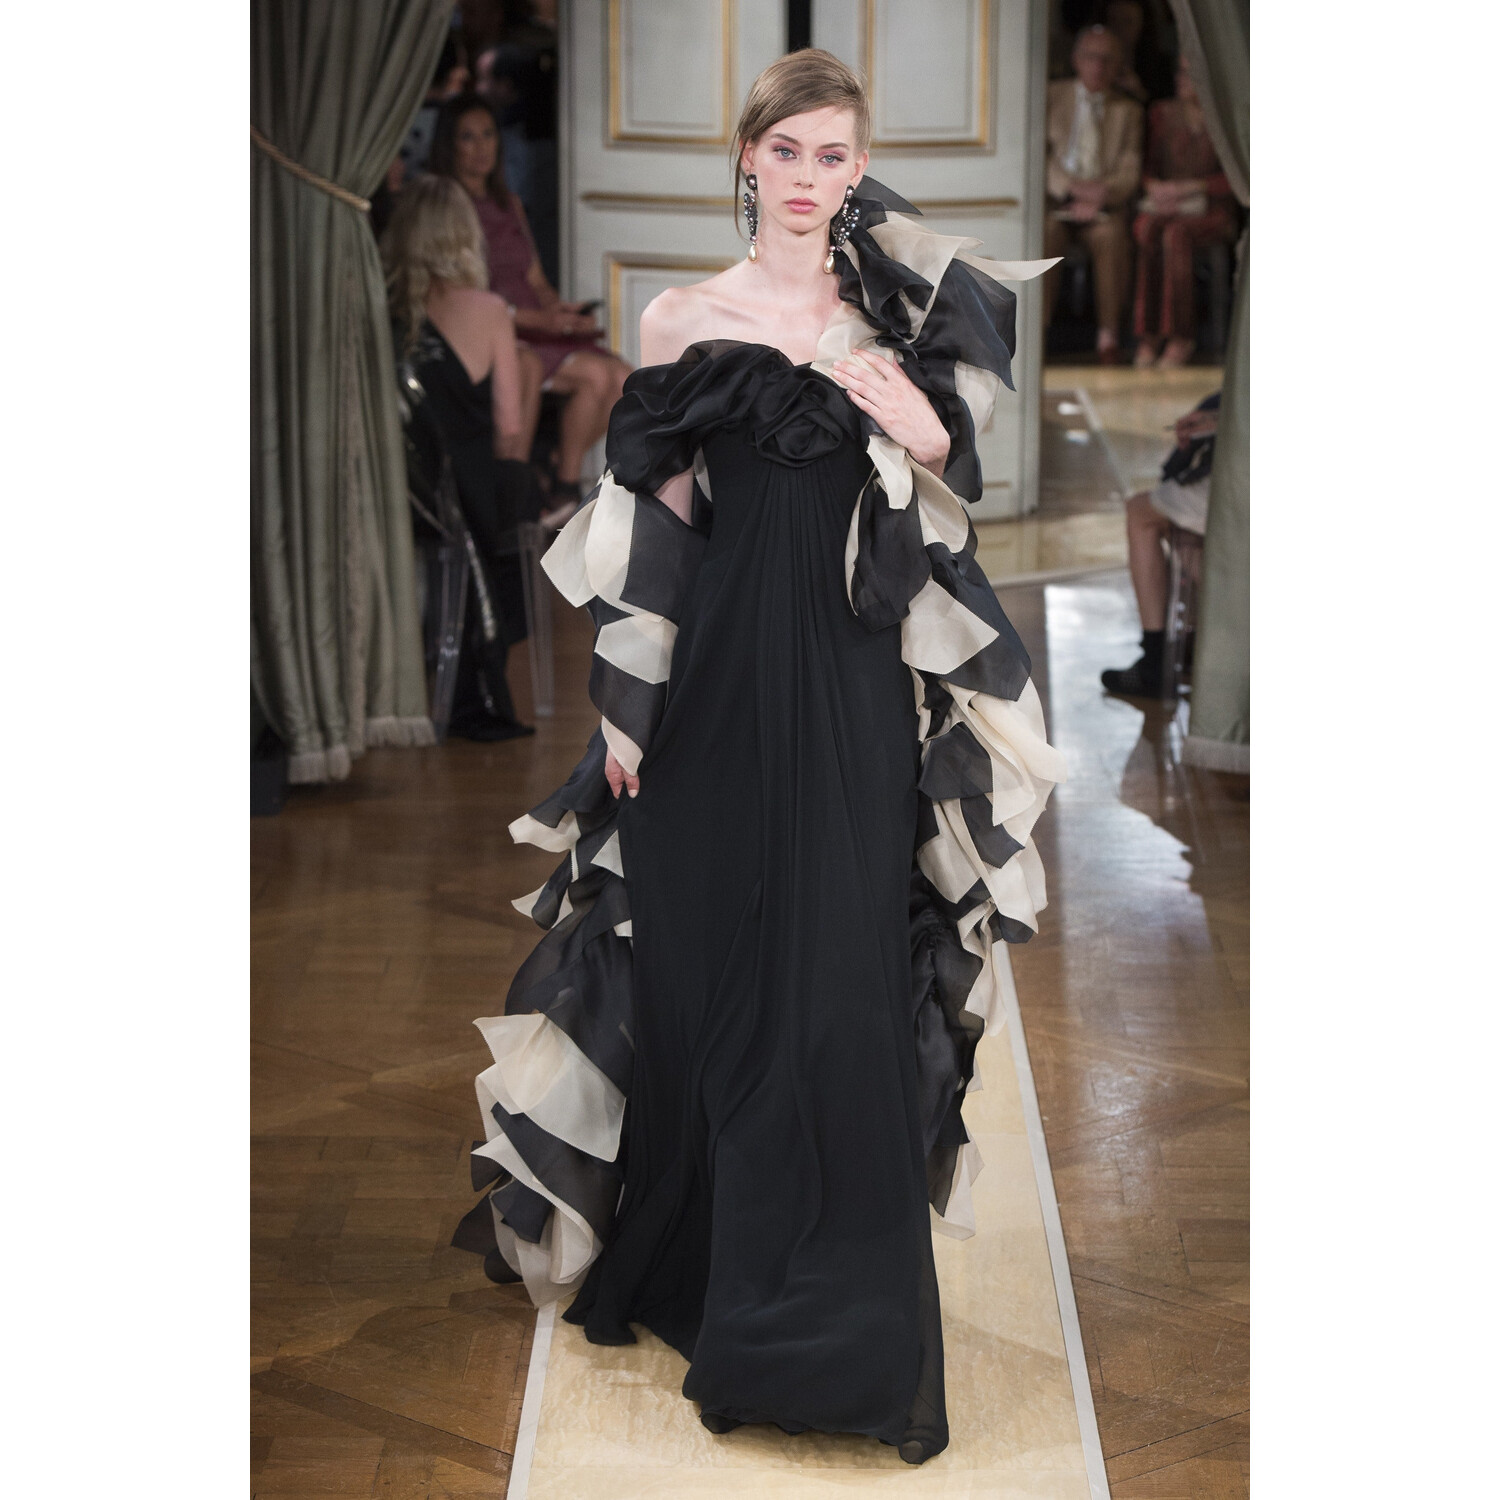 Фото Armani Prive Fall 2018 Couture Collection / Армани Приве Осень 2018 Кутюр коллекция